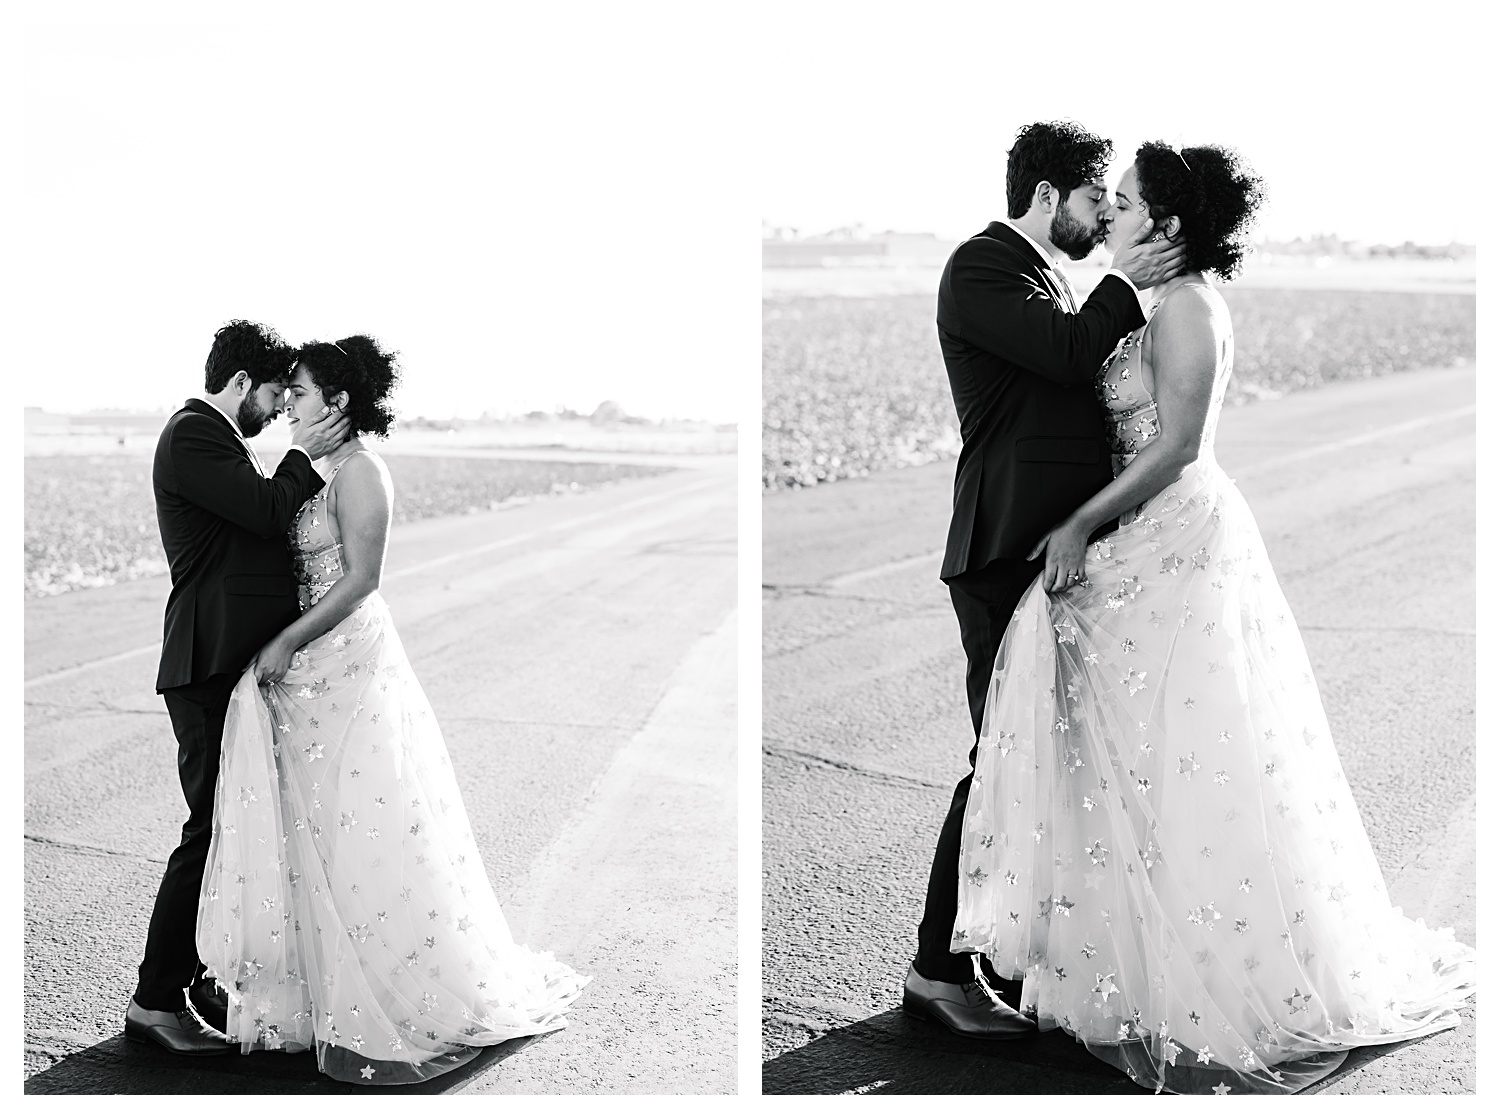 black and white wedding photo at airport hangar